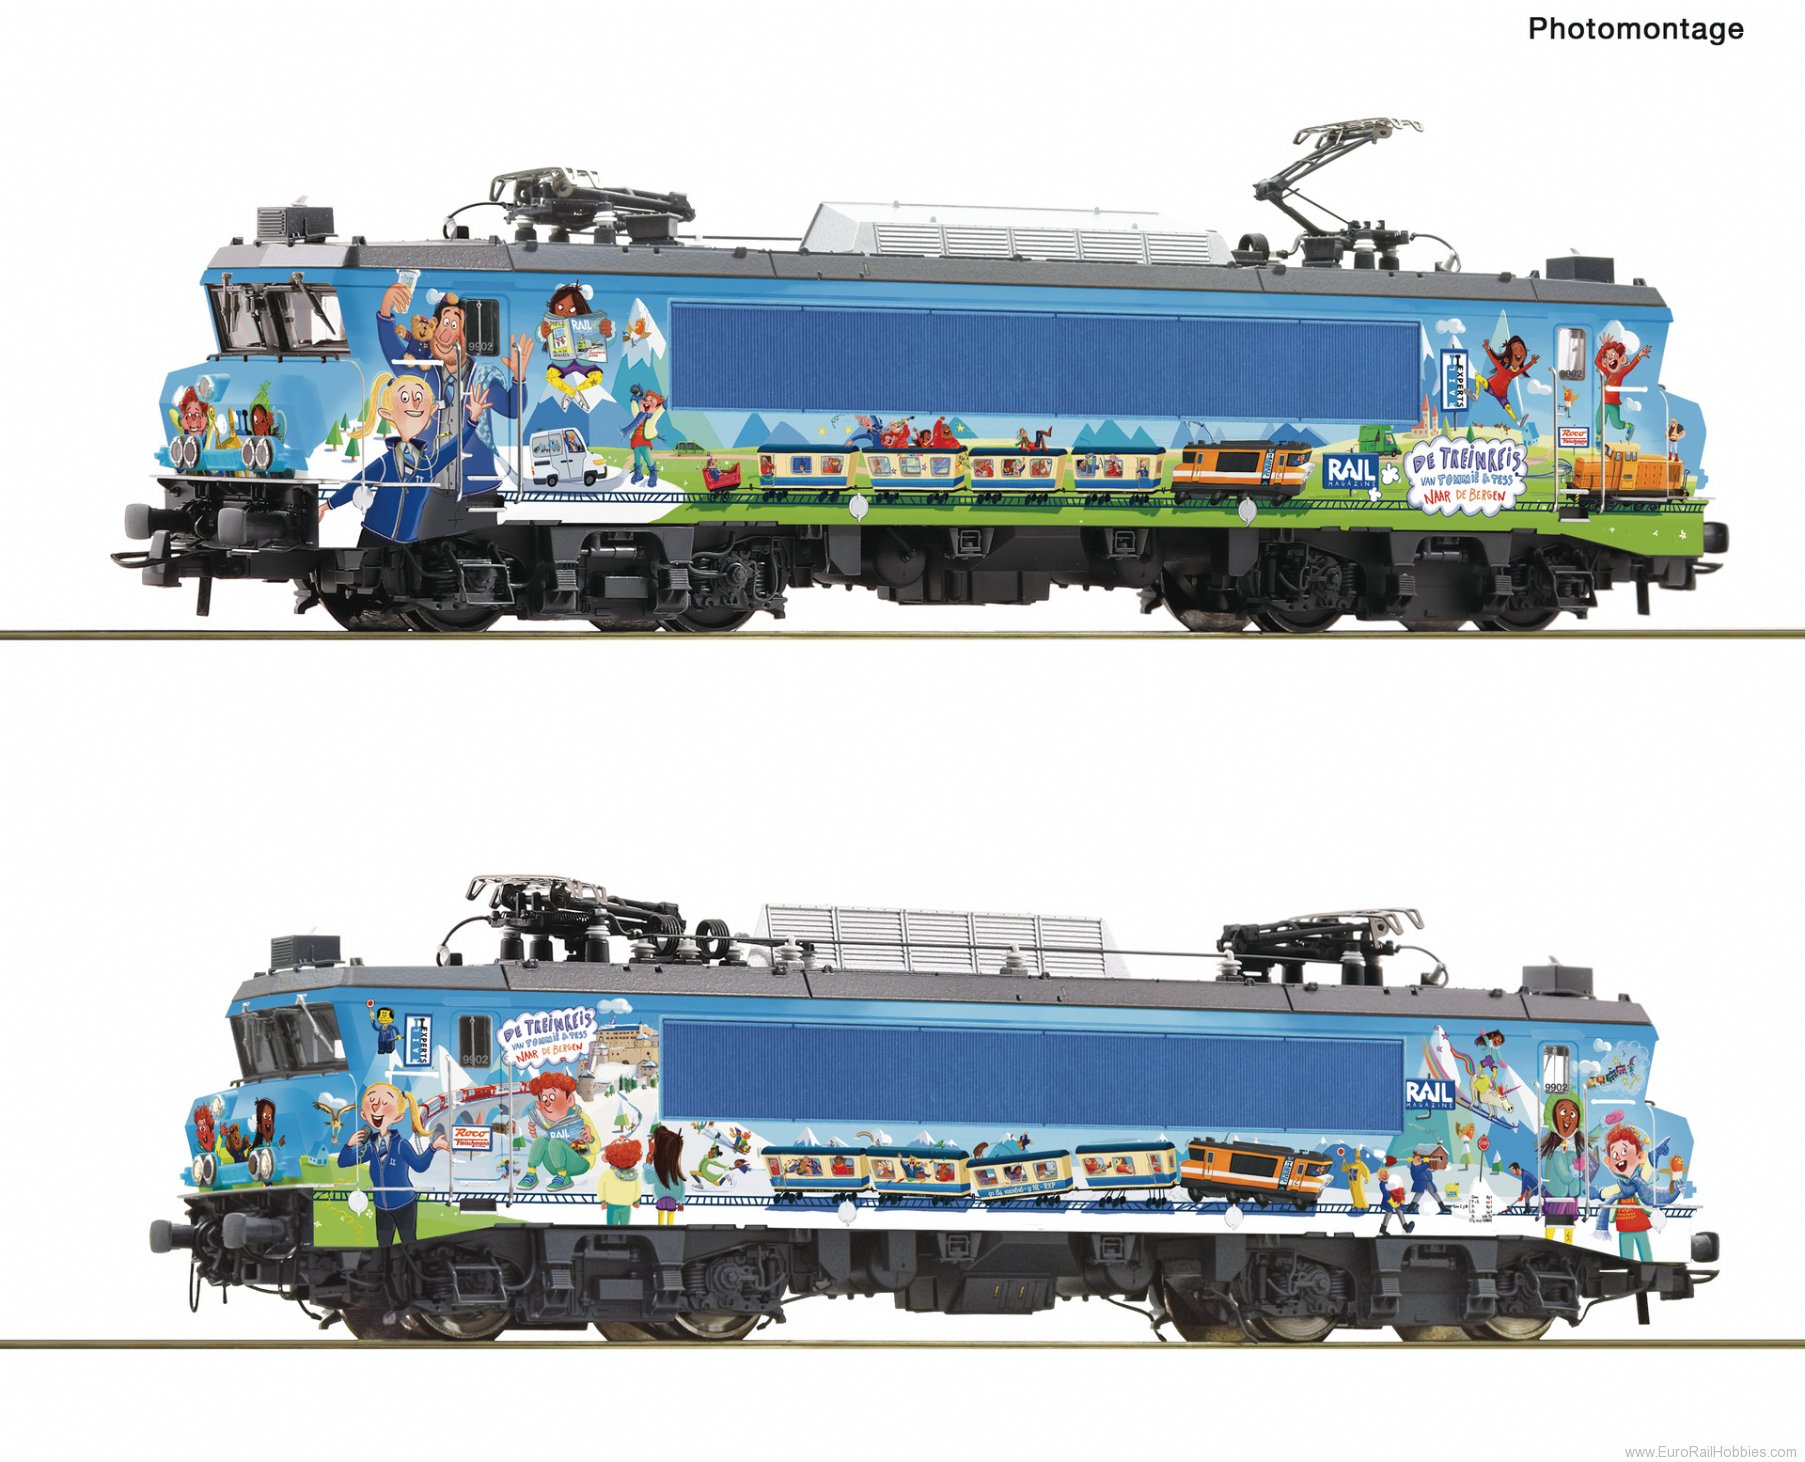 Roco 7520089 Electric locomotive 9902, Railexperts (Markli